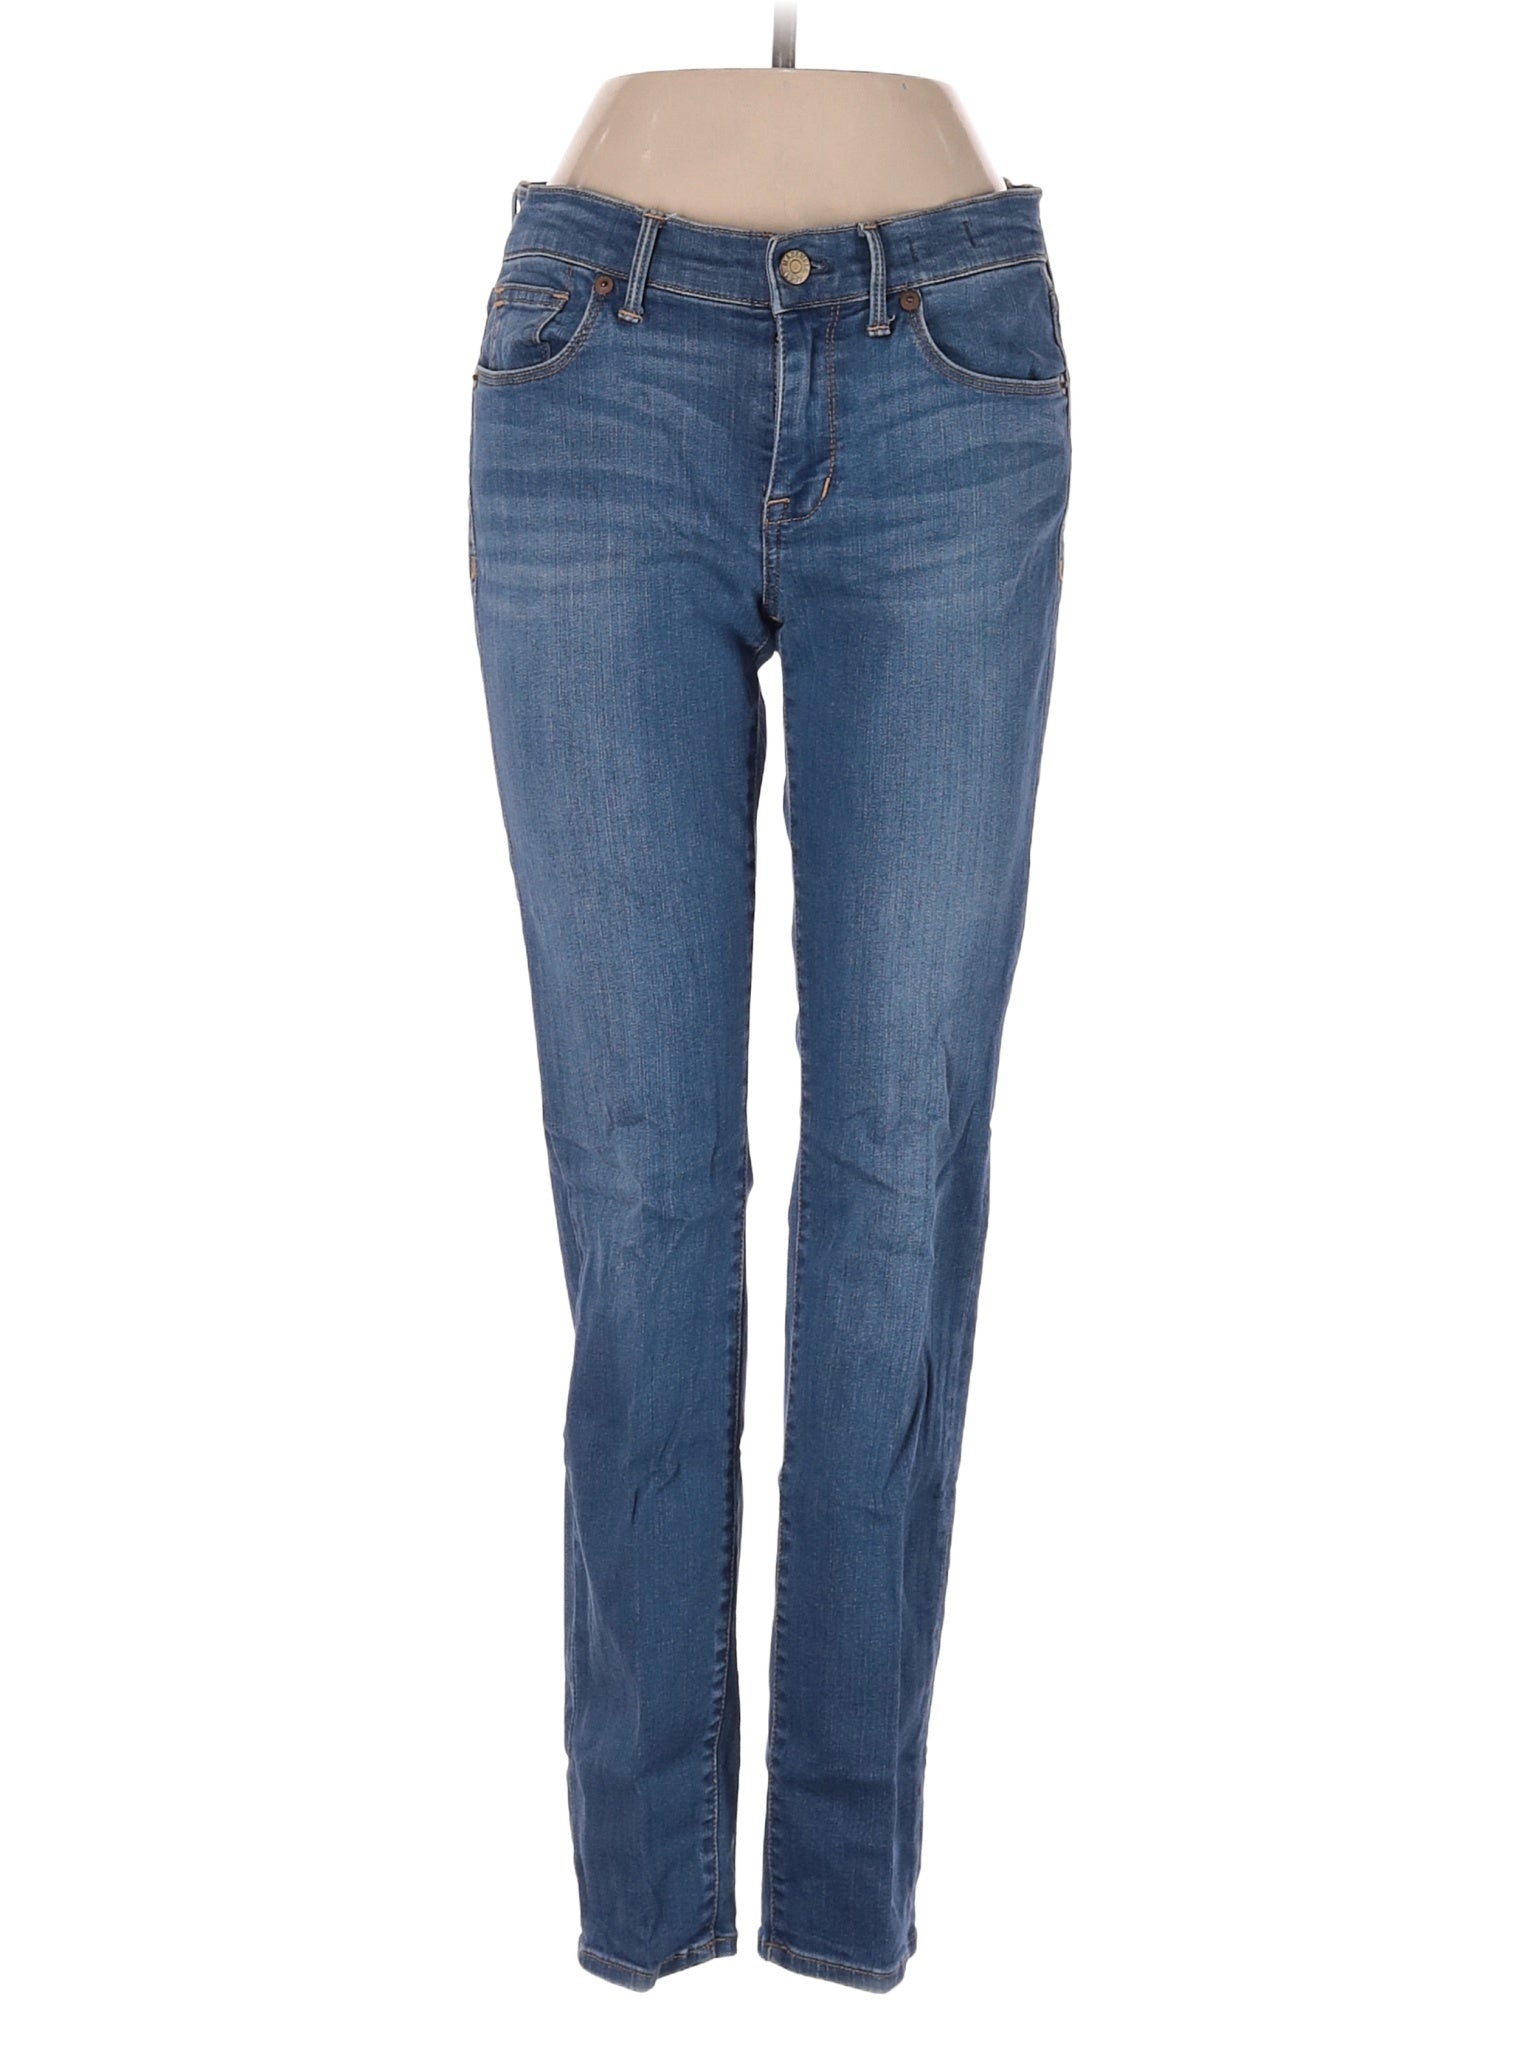 Low-Rise Skinny Jeans in Dark Wash waist size - 27